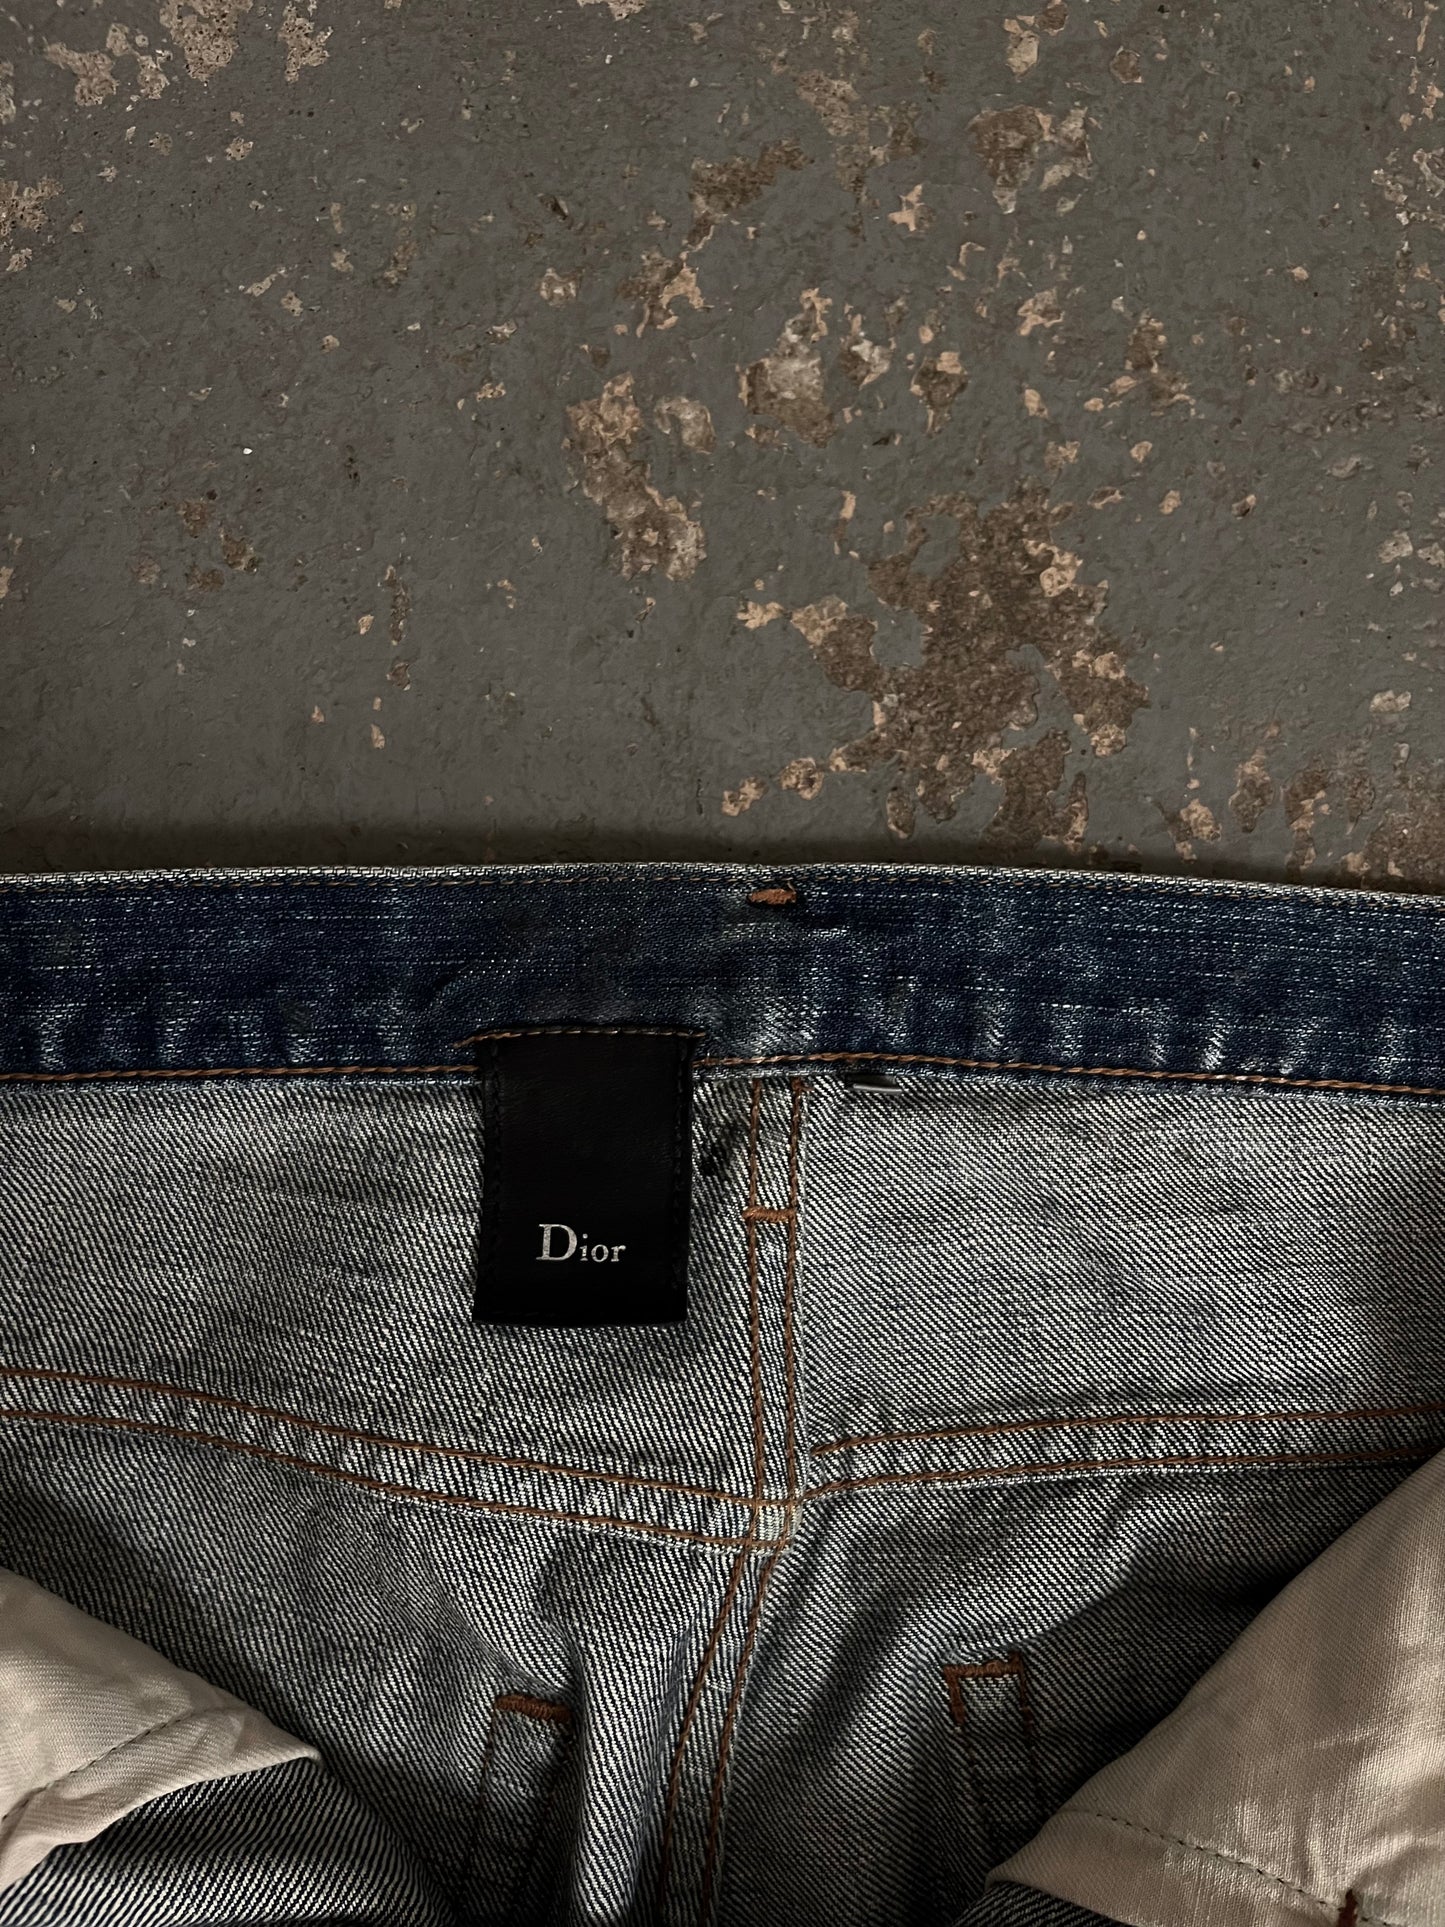 Dior AW06 “These Grey Days” Luster Clawmark Denim